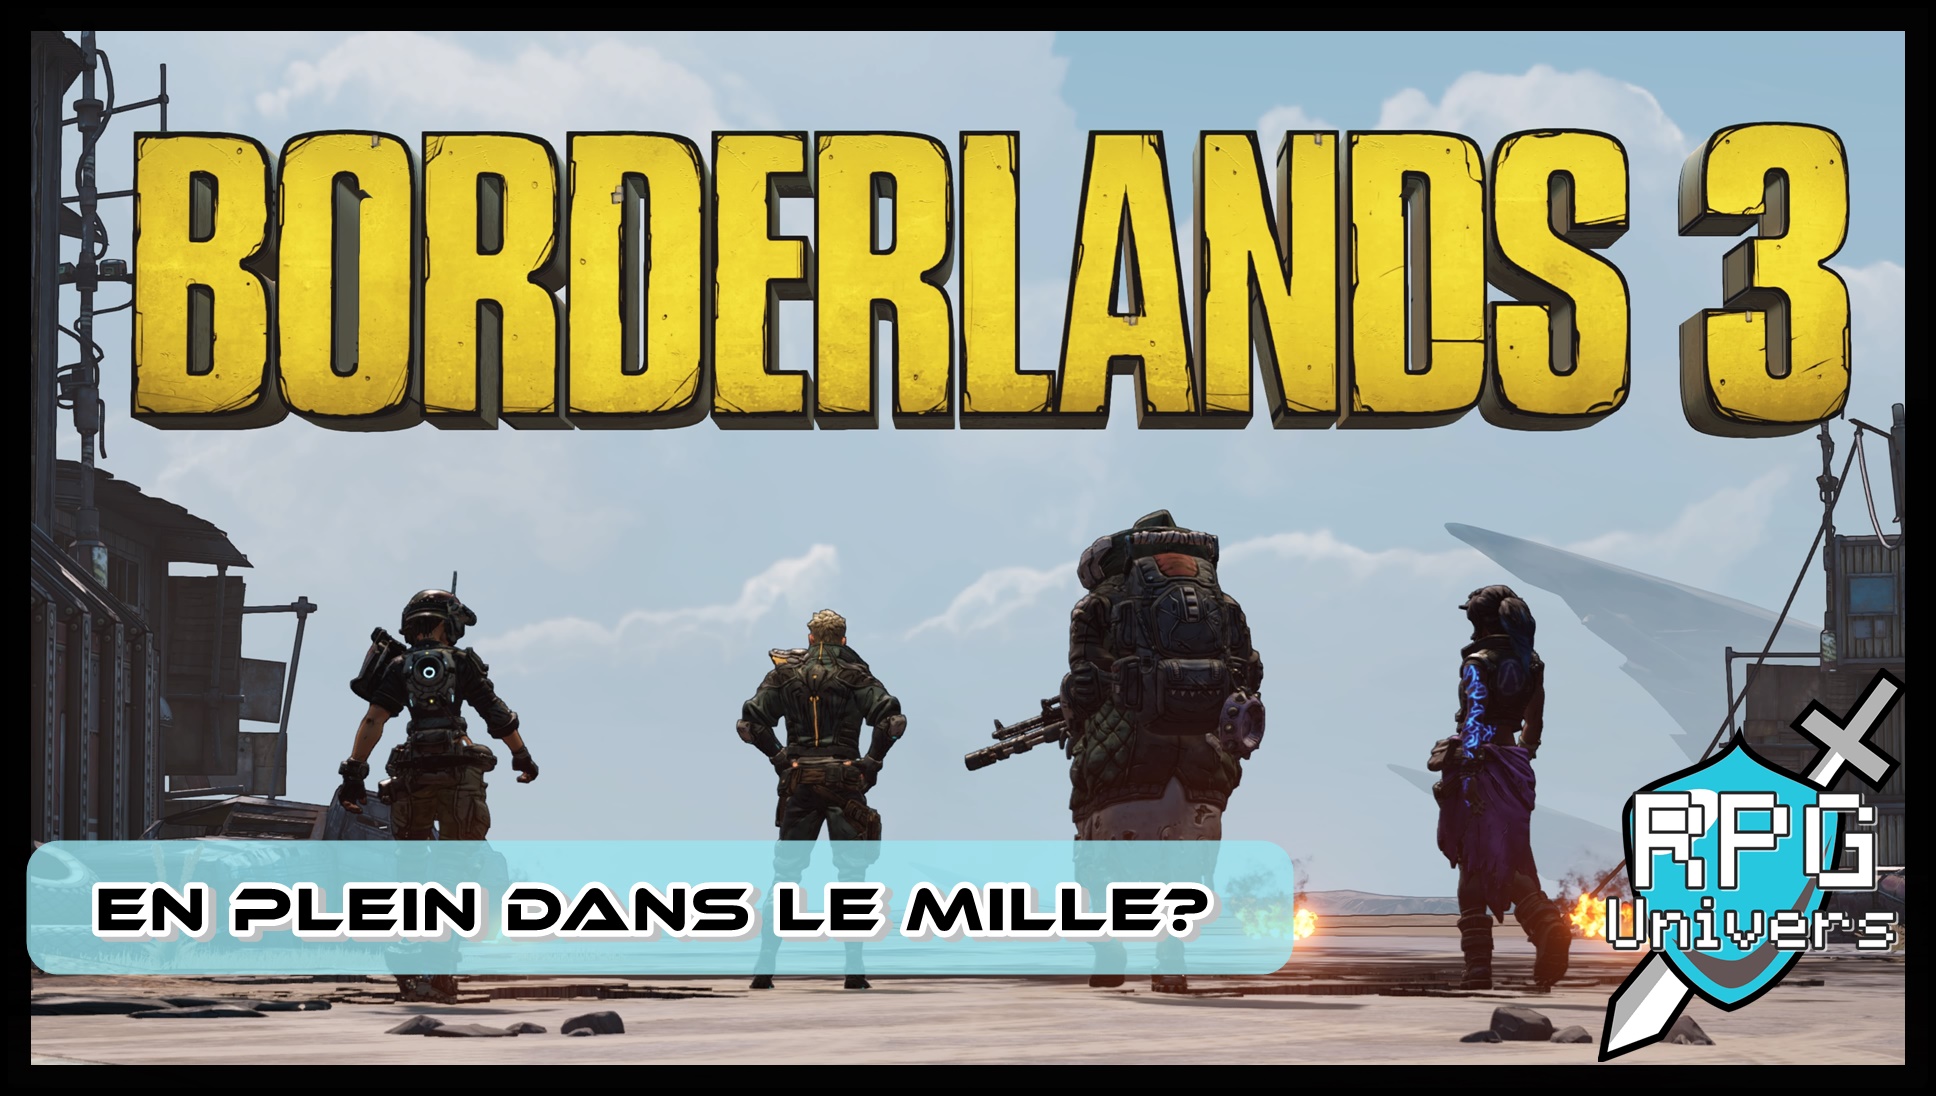 You are currently viewing Borderlands 3, en plein dans le mille?